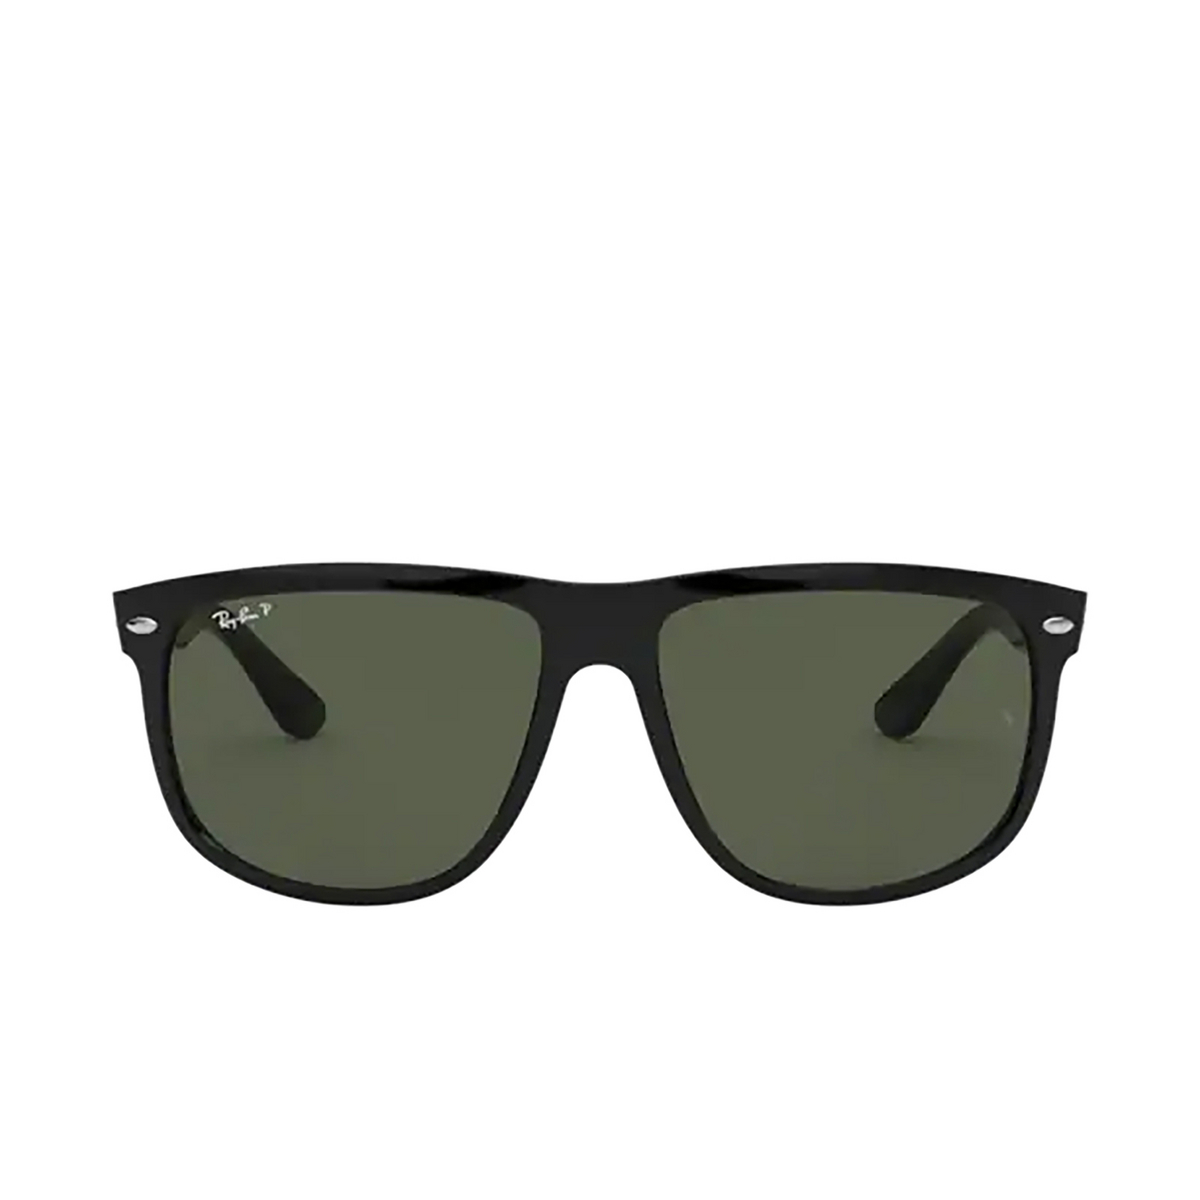 Ray-Ban BOYFRIEND Sunglasses 601/58 Black - front view